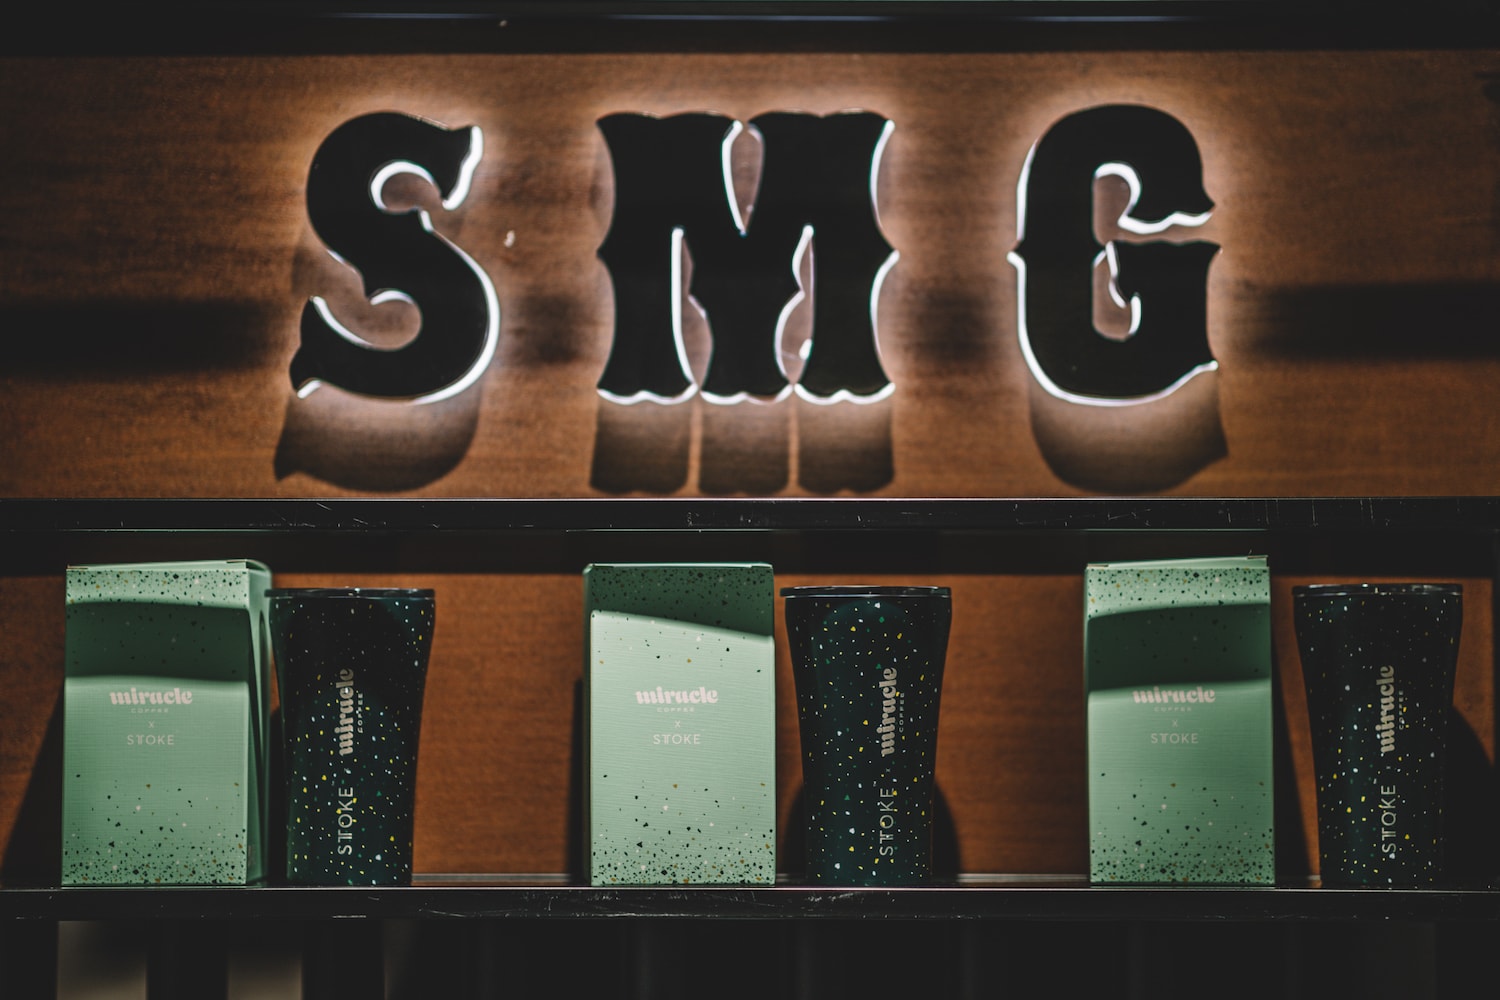 SMUDGEstore 上海概念店即将开业